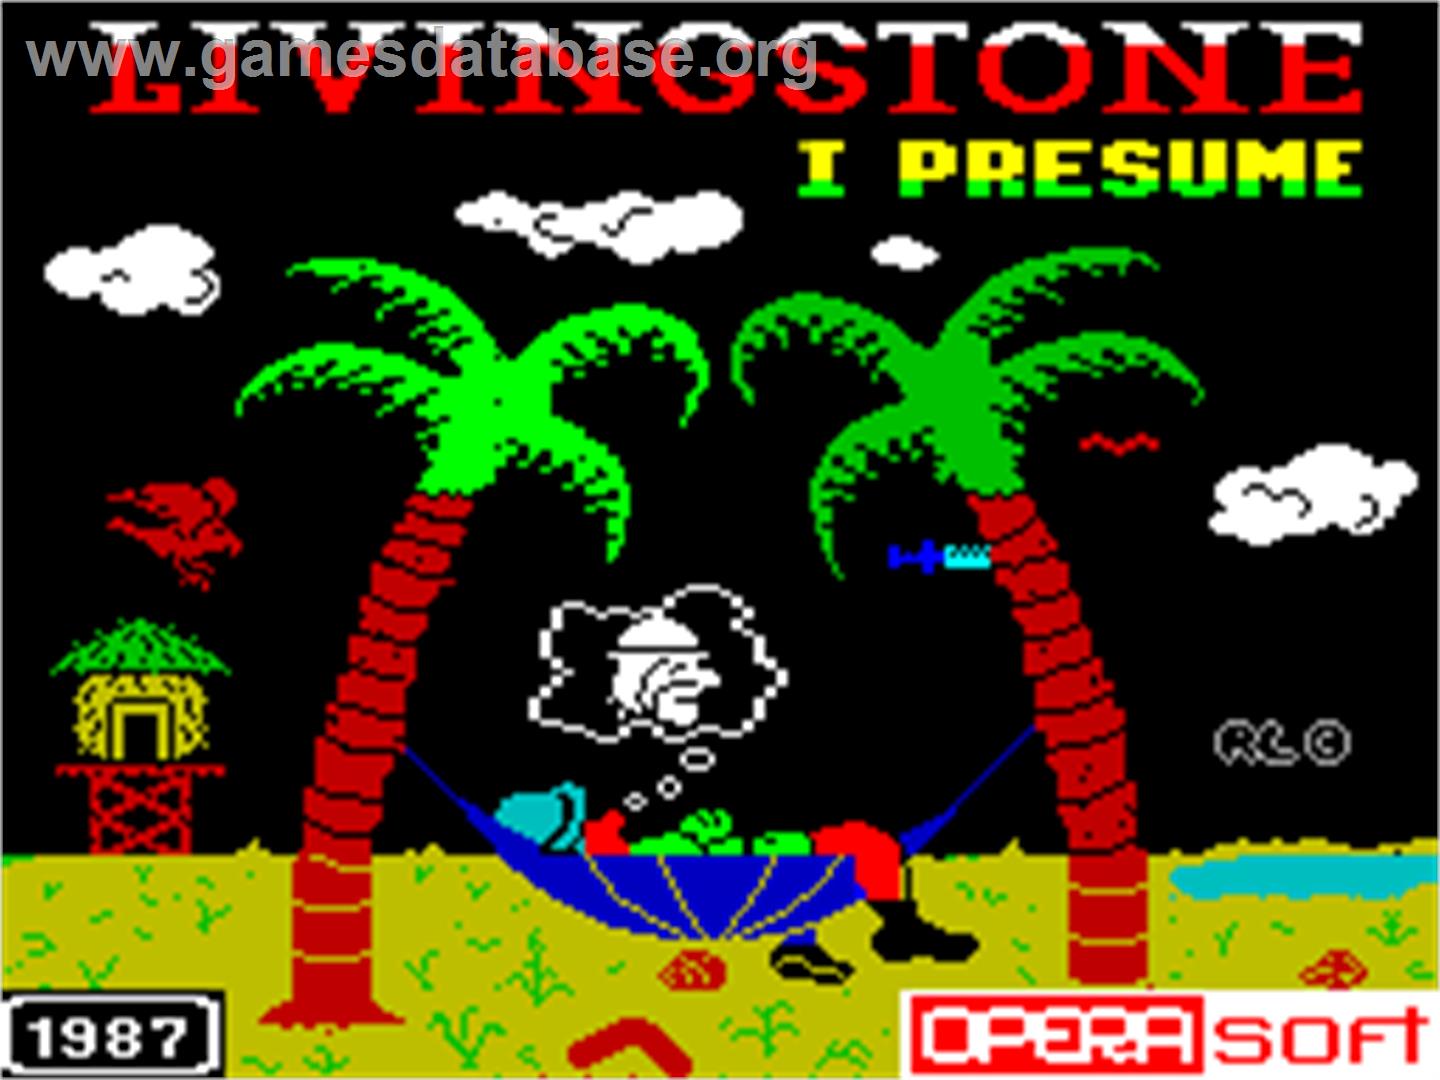 Livingstone Supongo 2 - Sinclair ZX Spectrum - Artwork - Title Screen